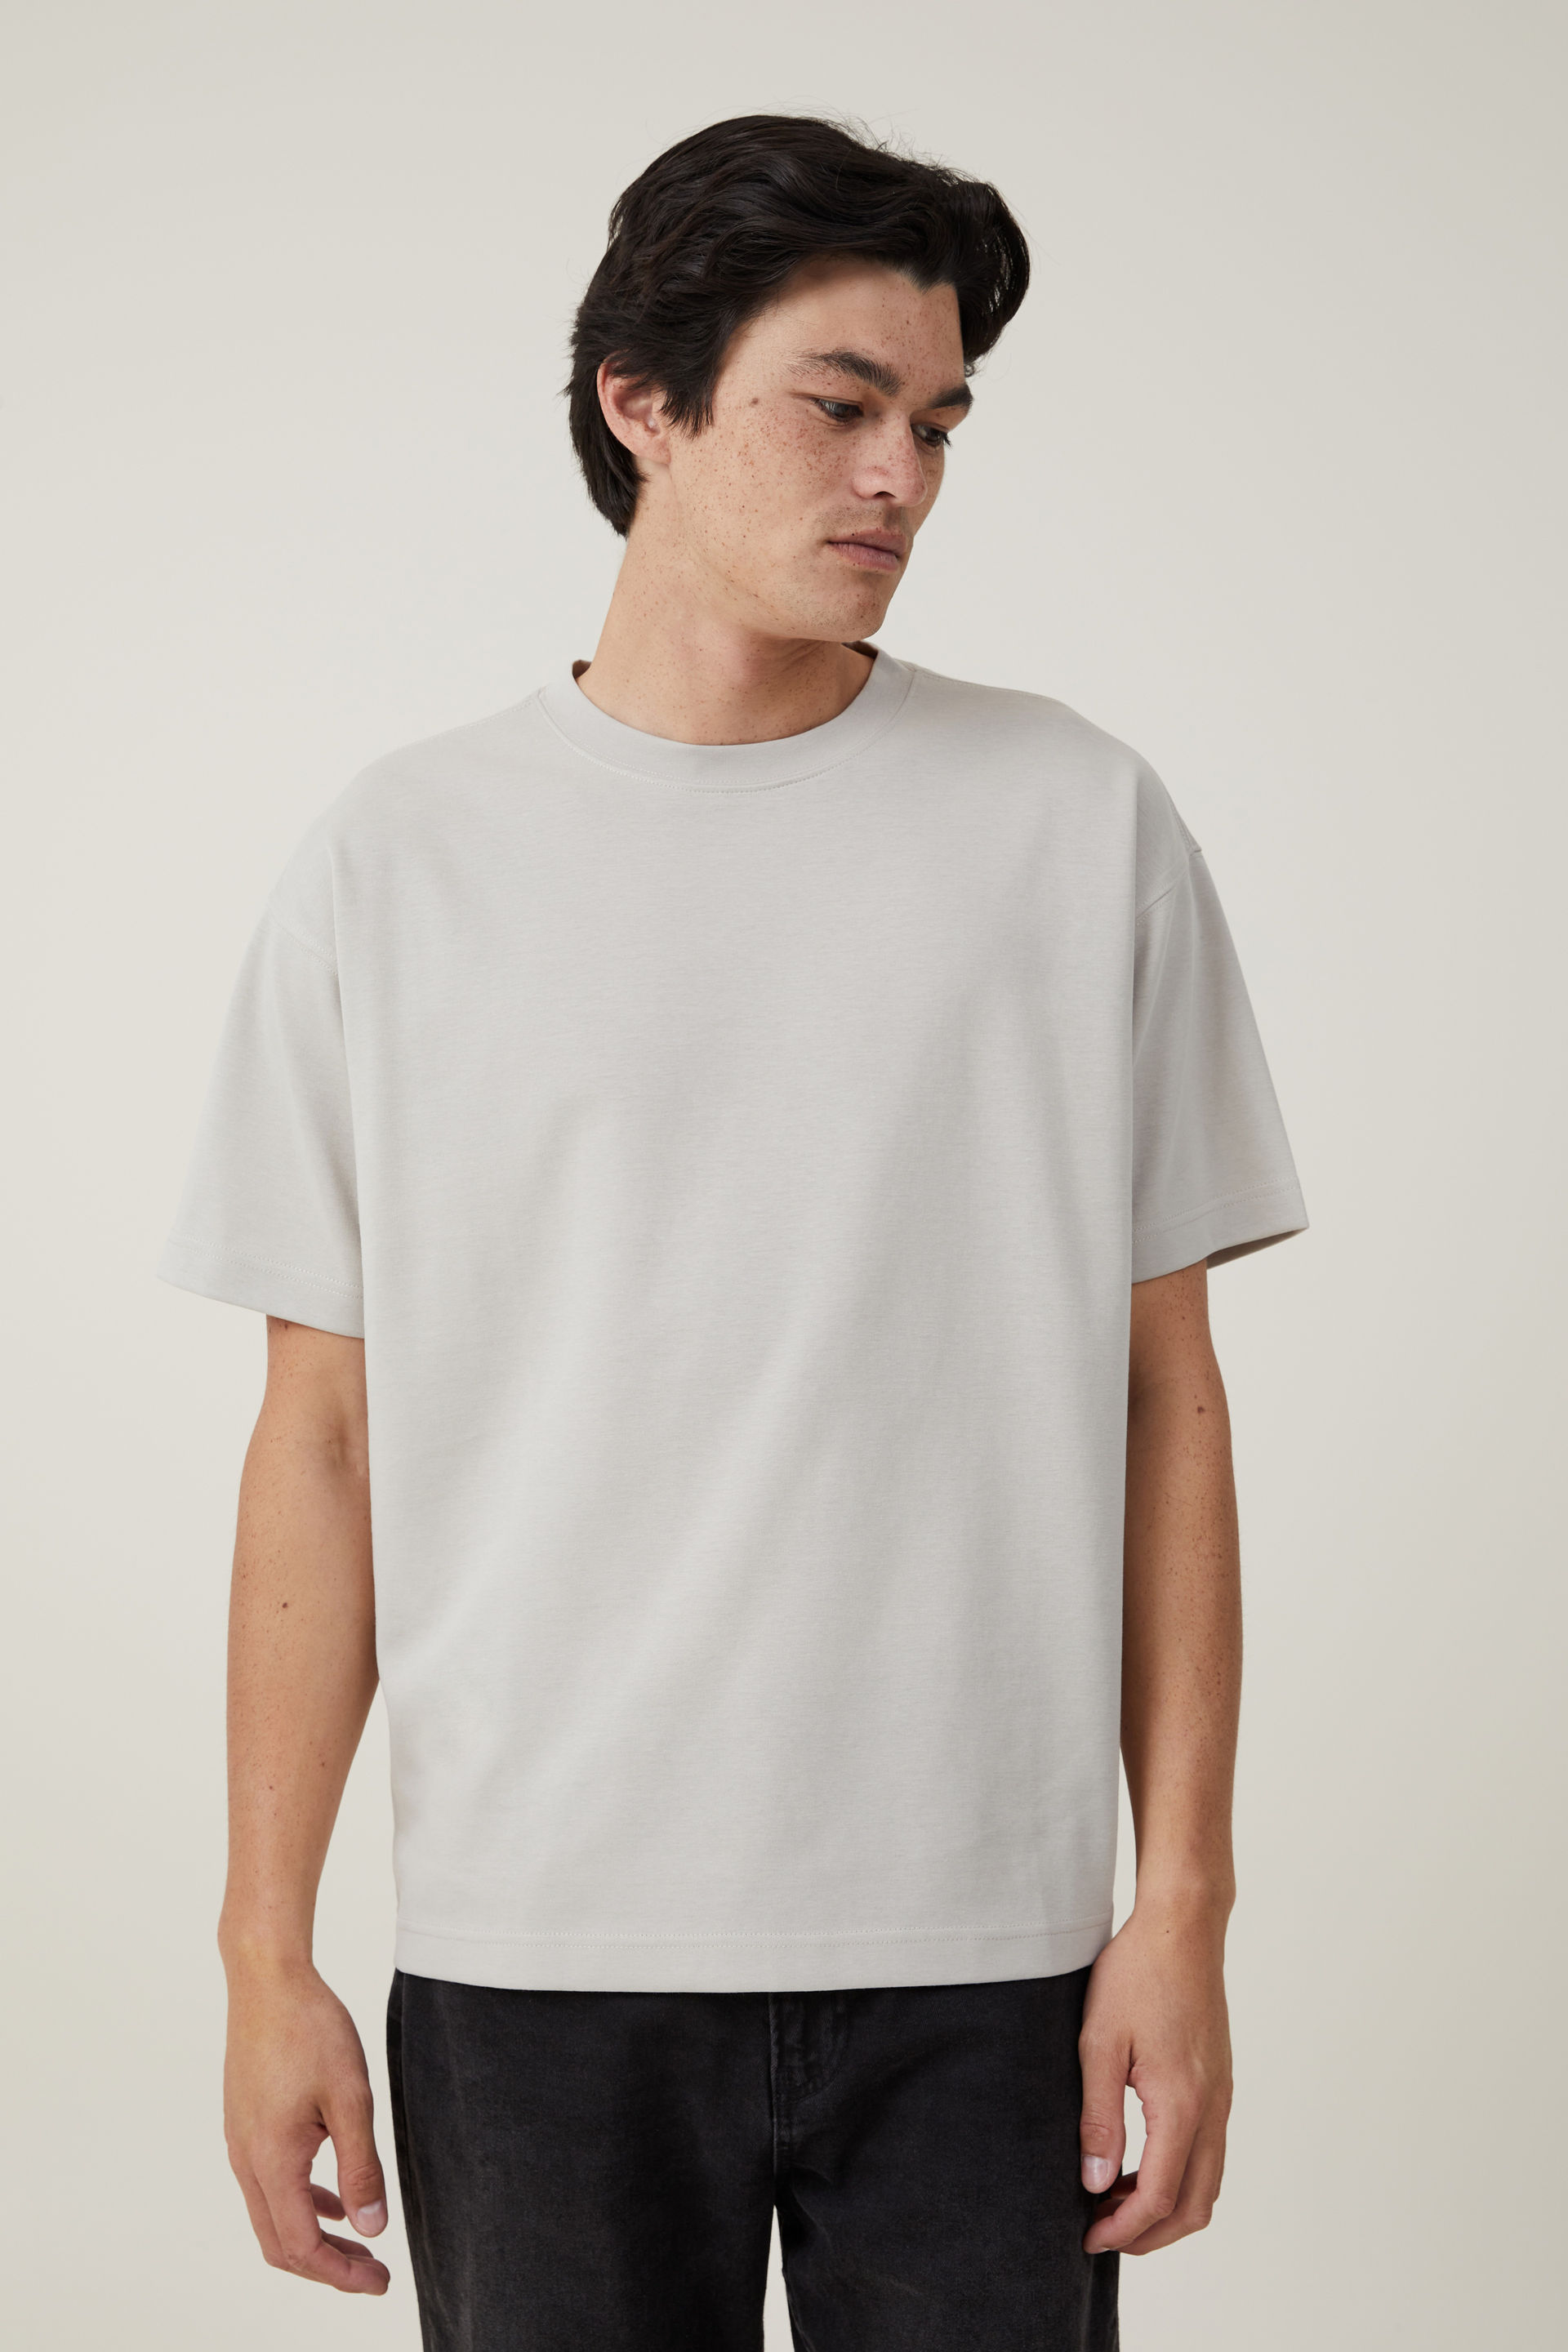 Cotton On Men - Hyperweave T-Shirt - Smoke